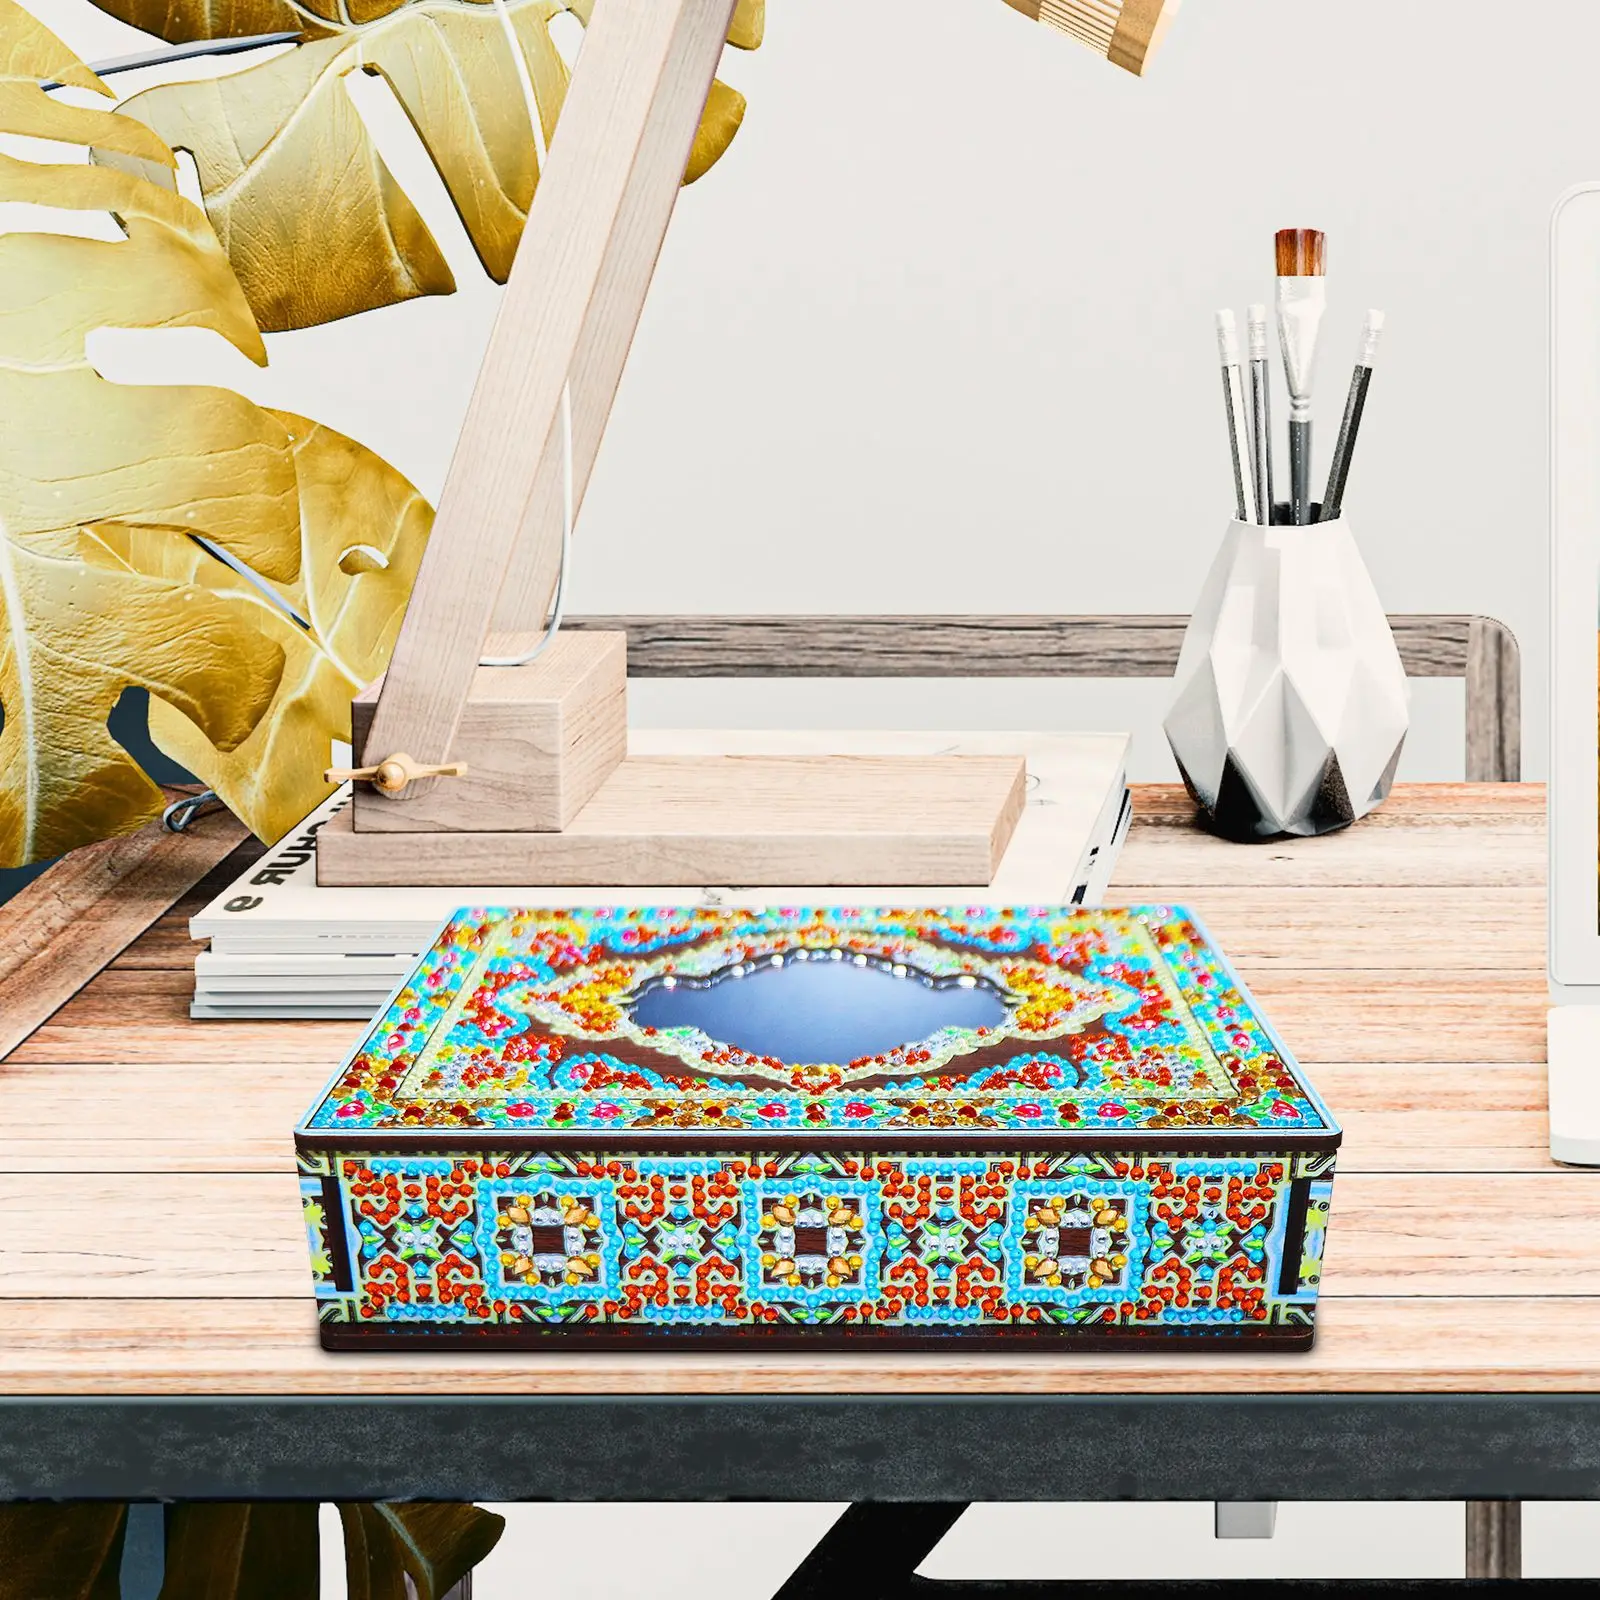 Mandala jewelry organizer wooden box with mirror diy storage case drilled with diamond